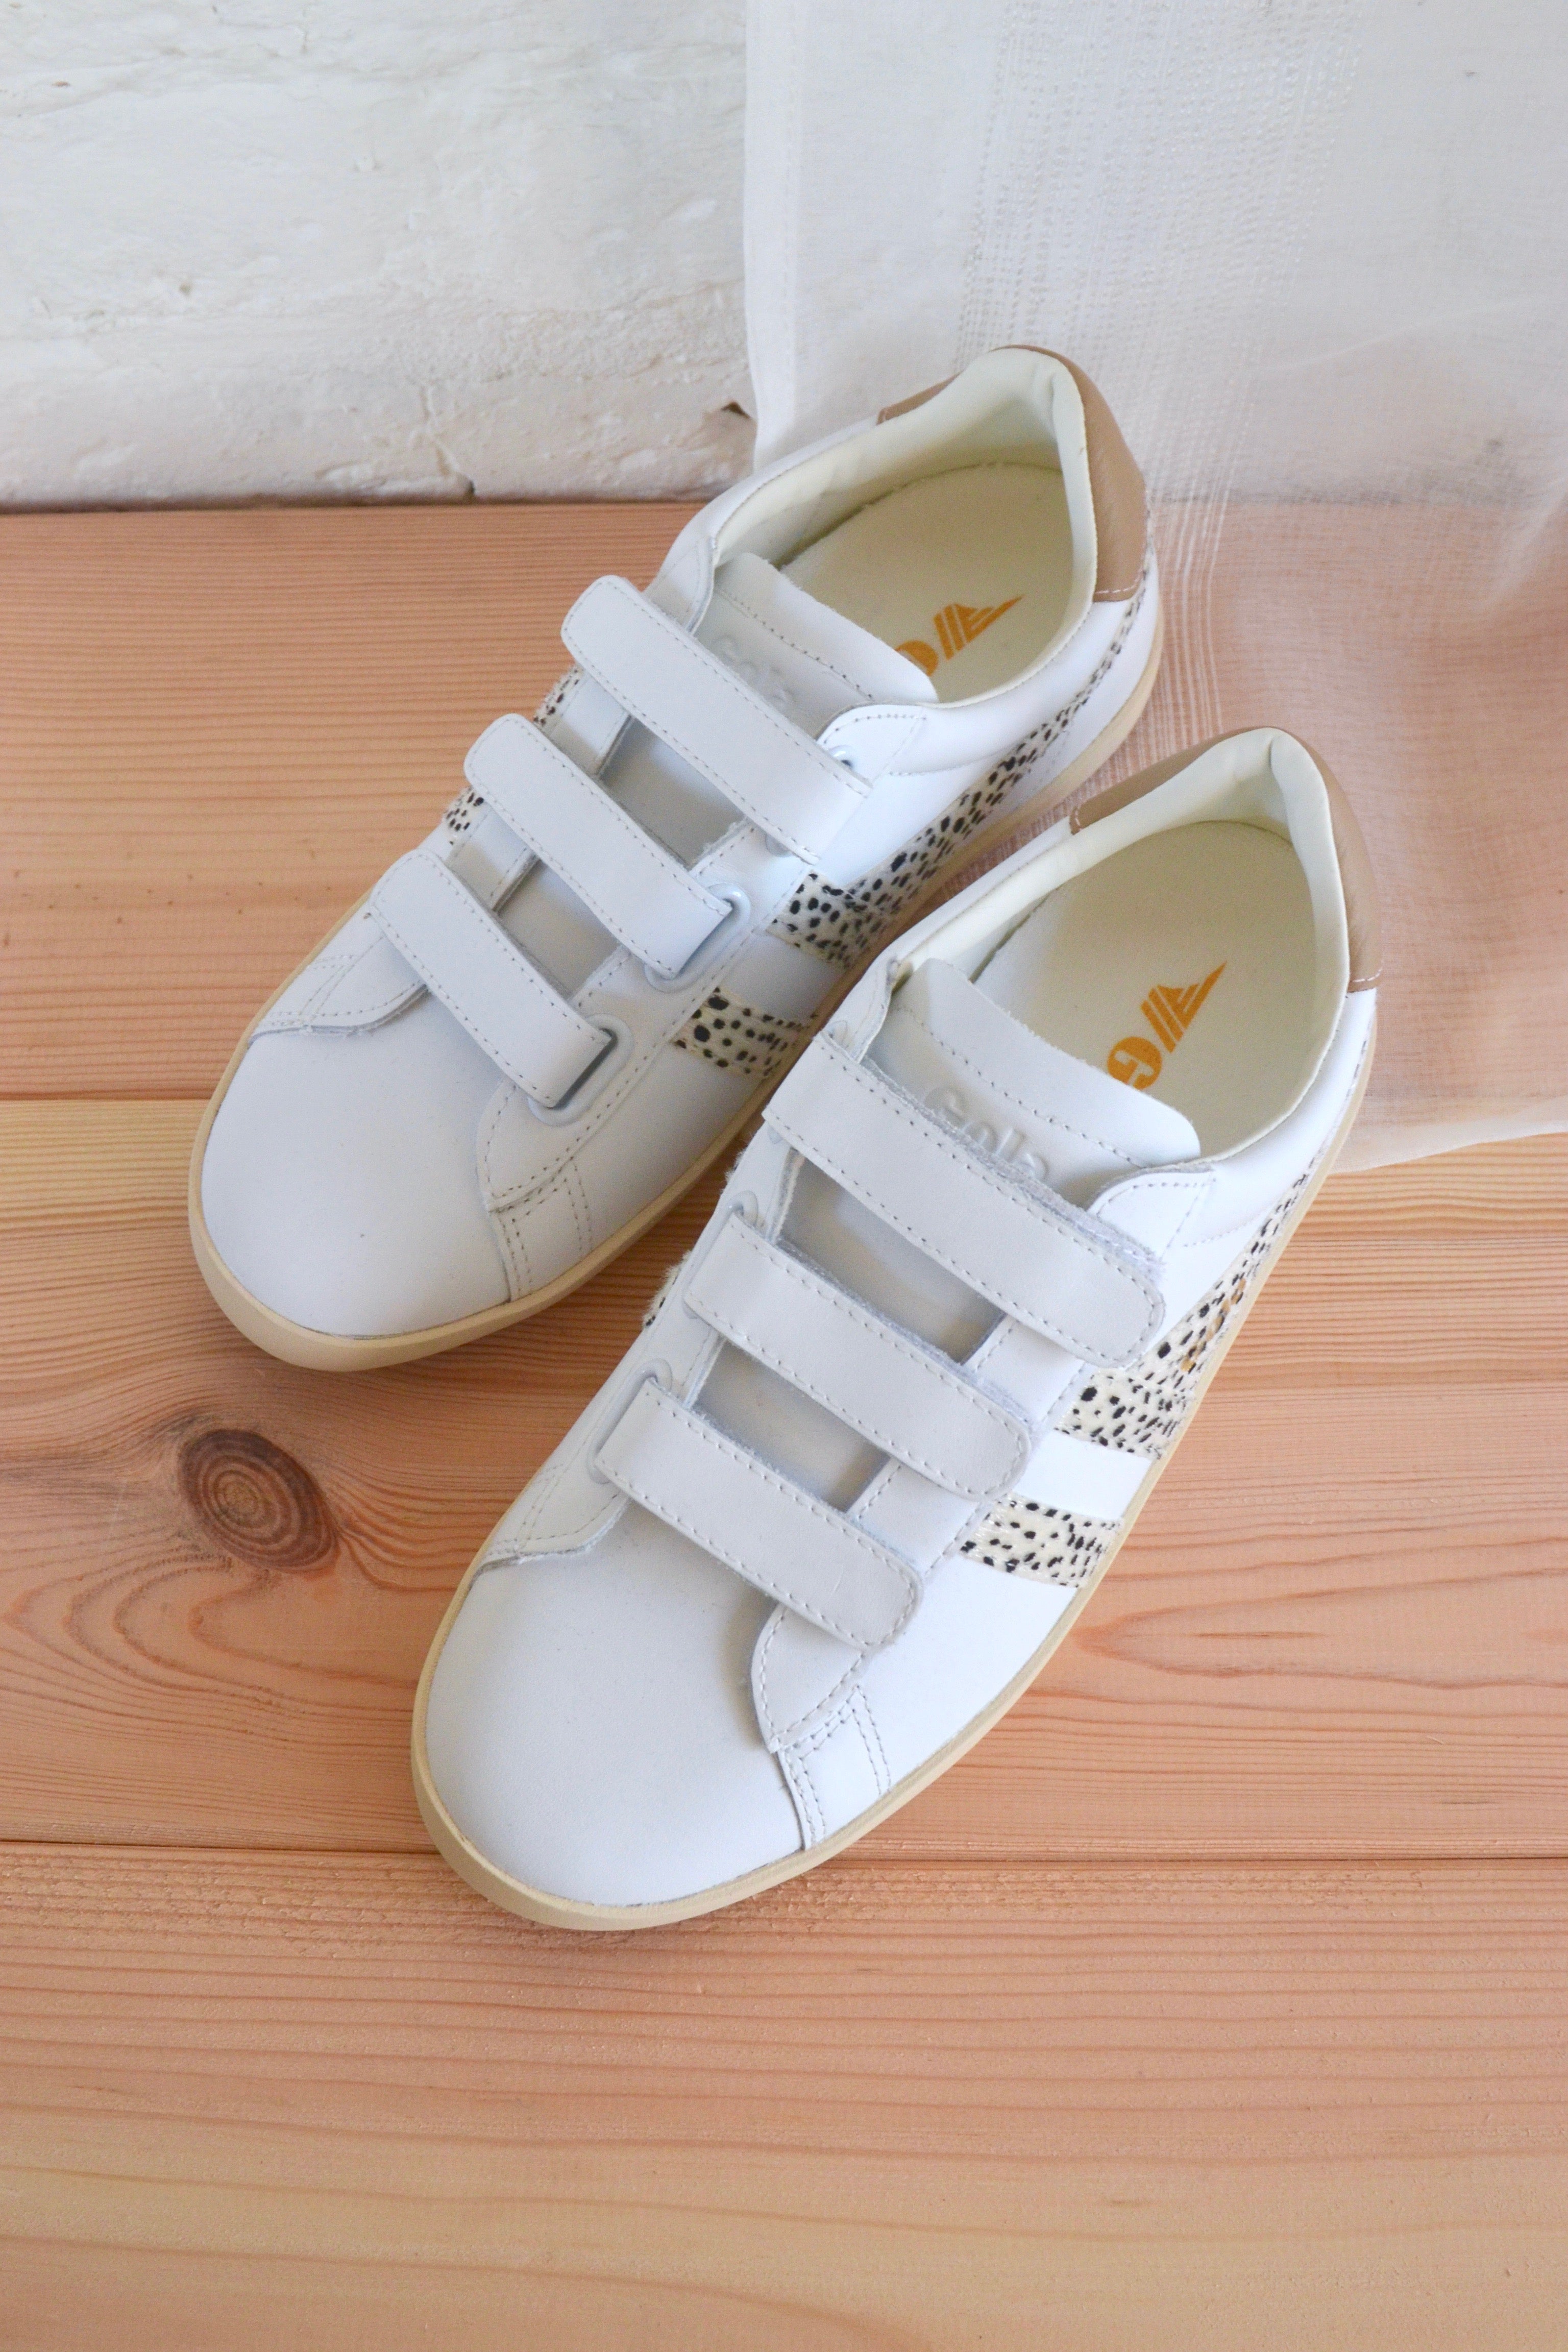 Nova Strap Sneakers White/Cheetah